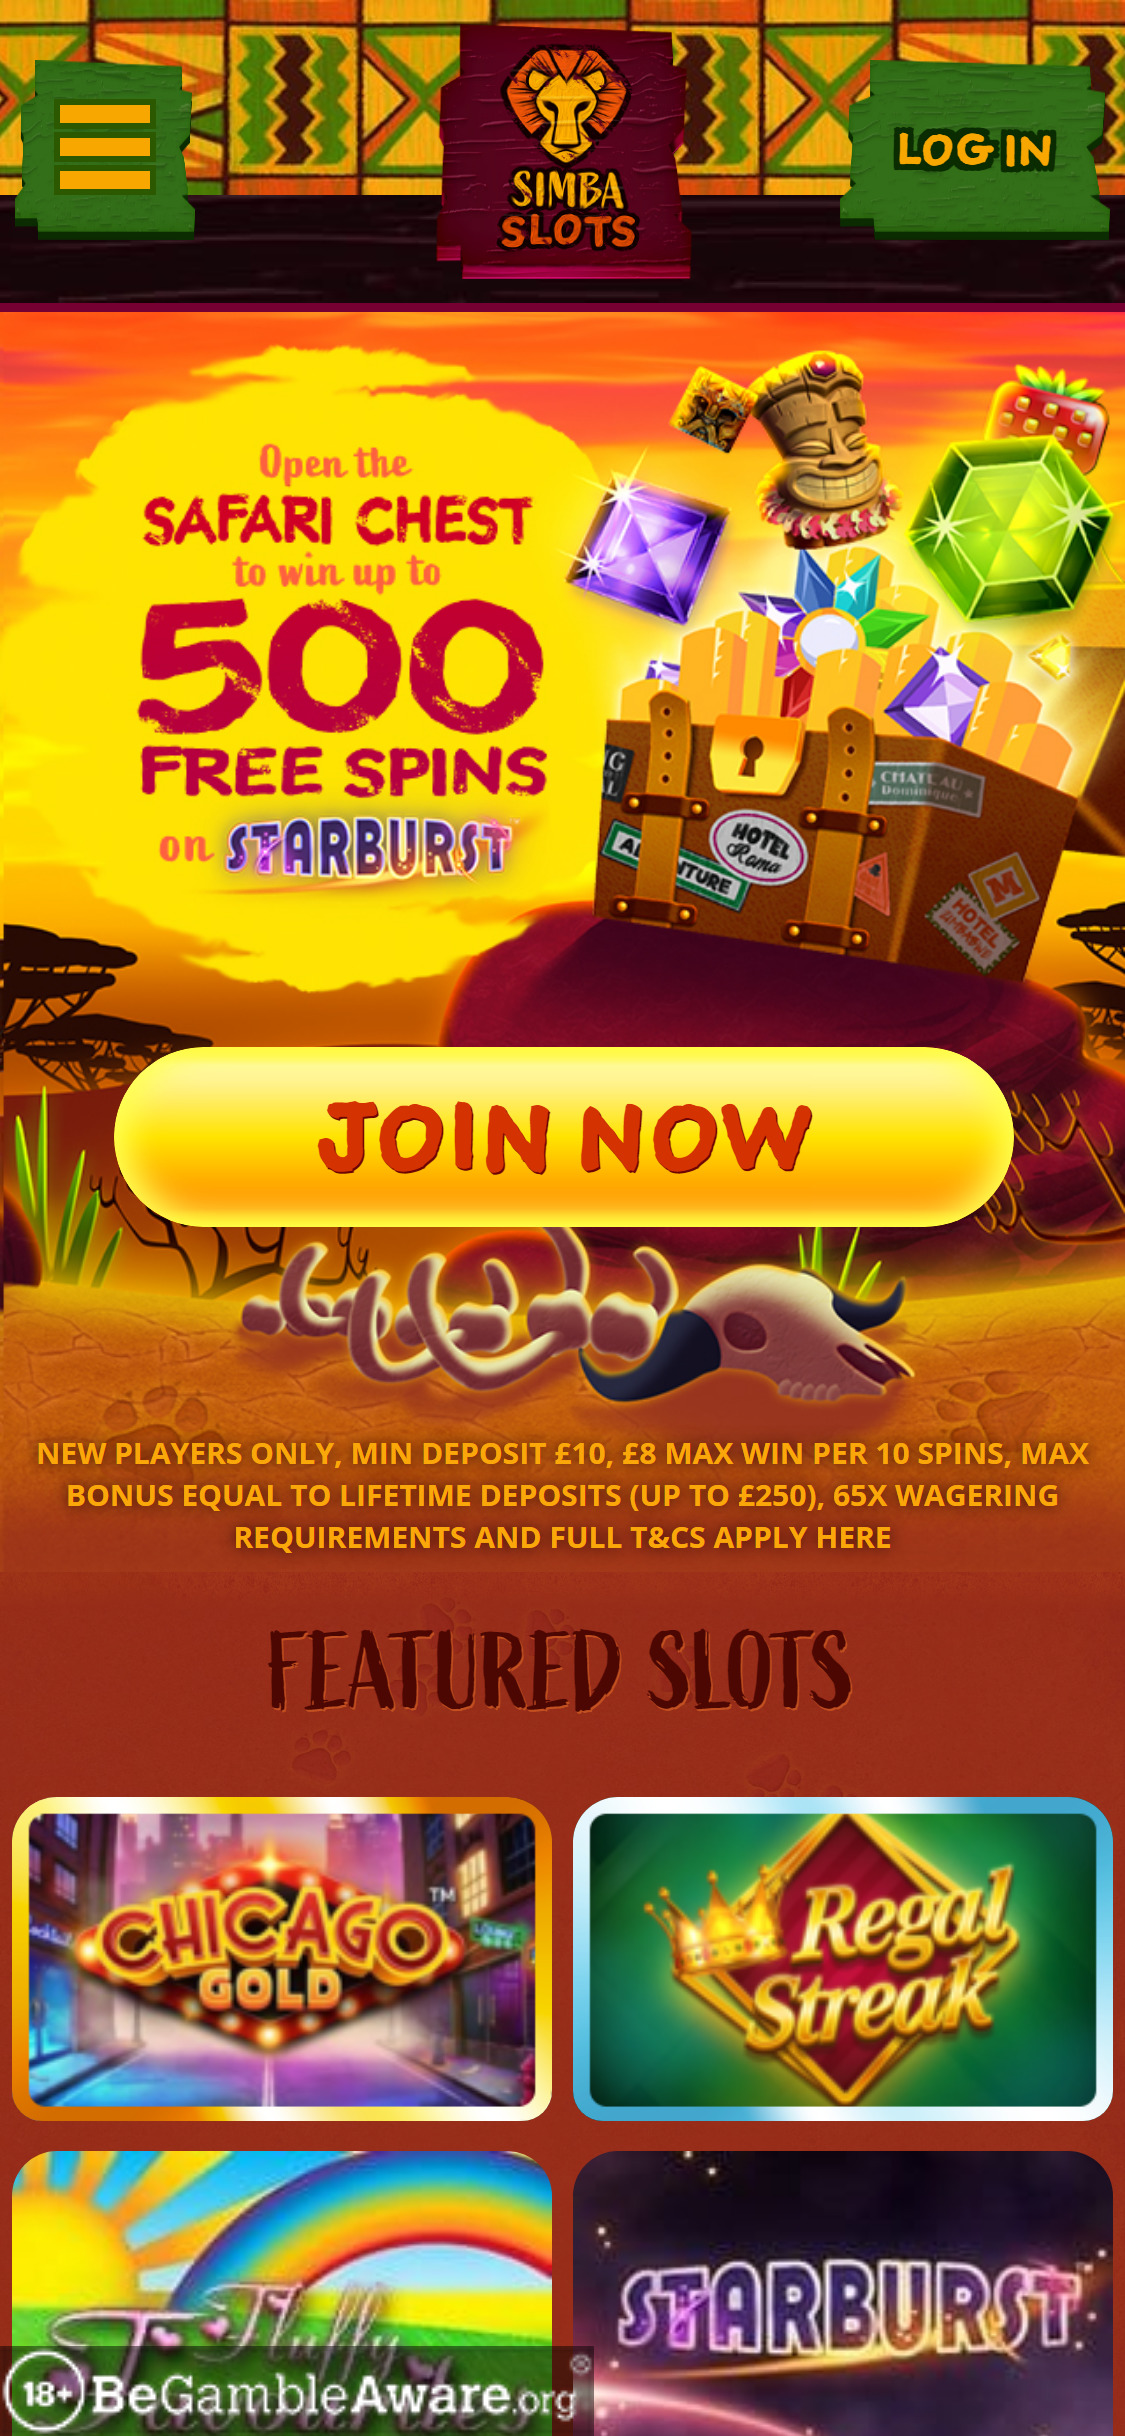 Simba Slots Casino Mobile Review